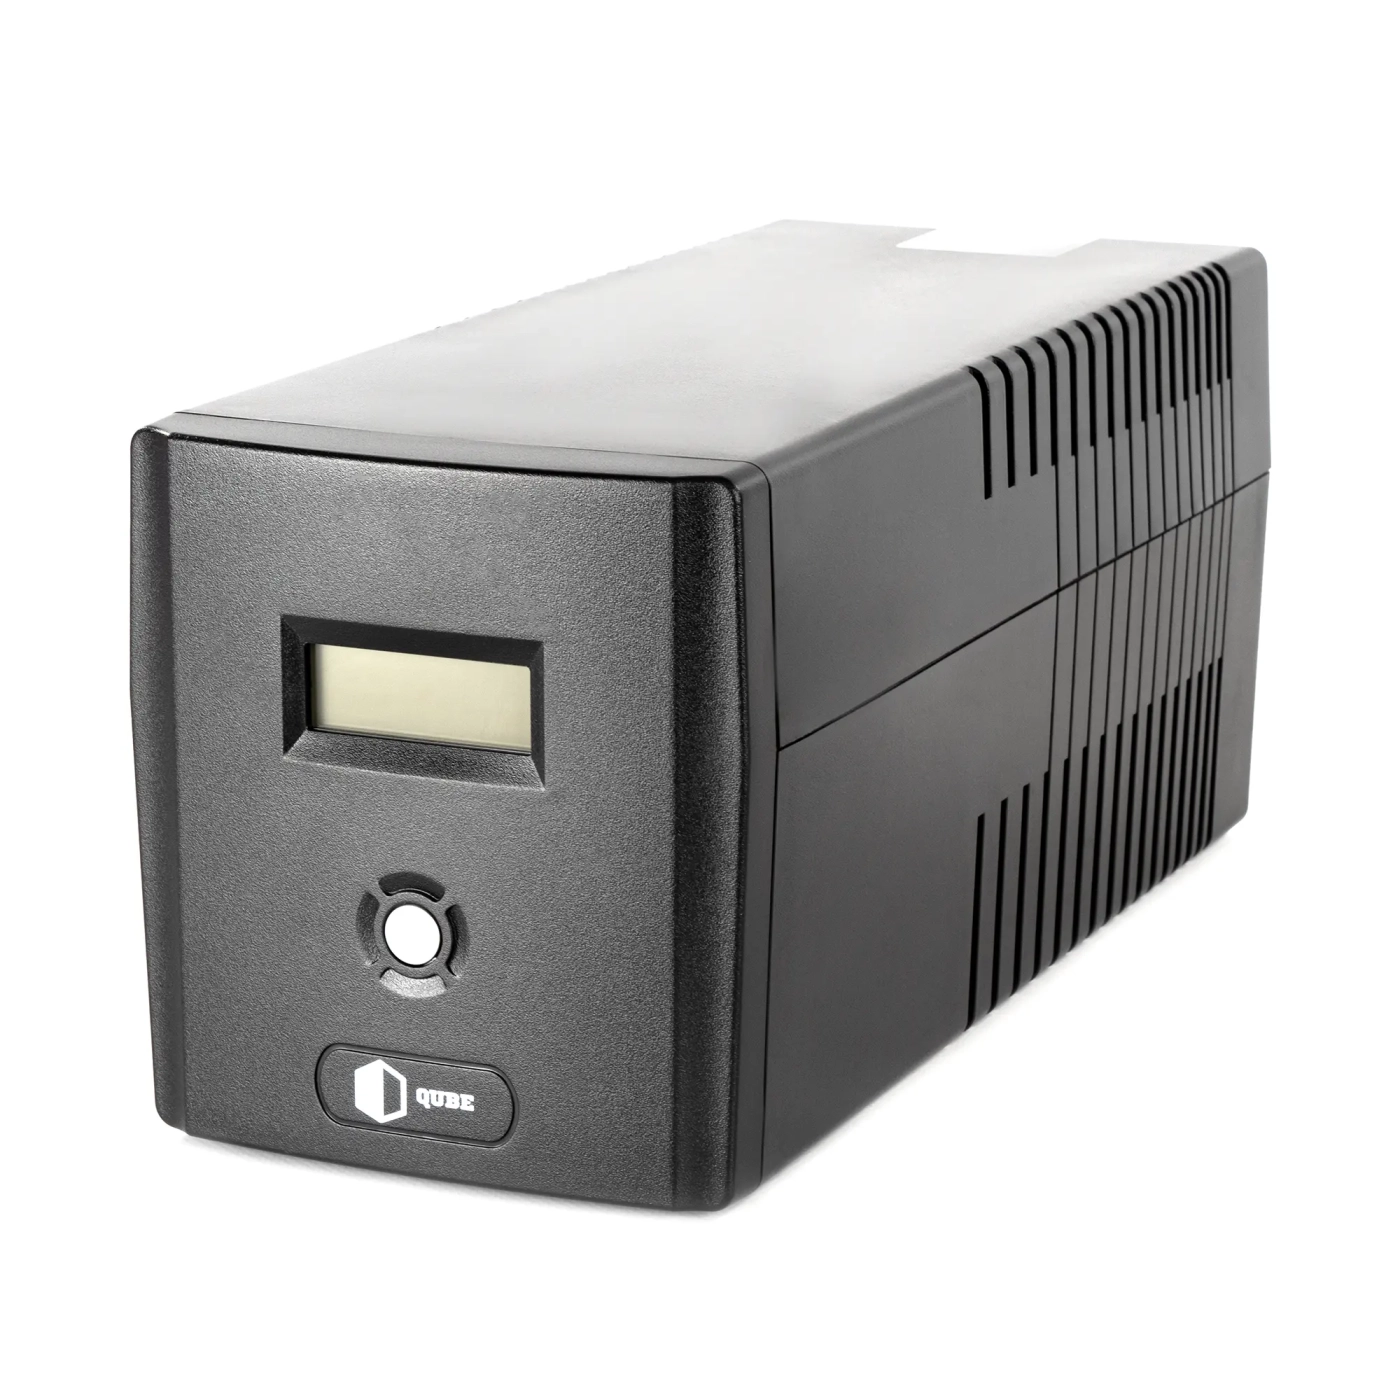 Купить ИБП (UPS) линейно-интерактивный Qube DG 1250, 1250VA/720W, LCD, 4 x Schuko, RJ-45, USB - фото 1